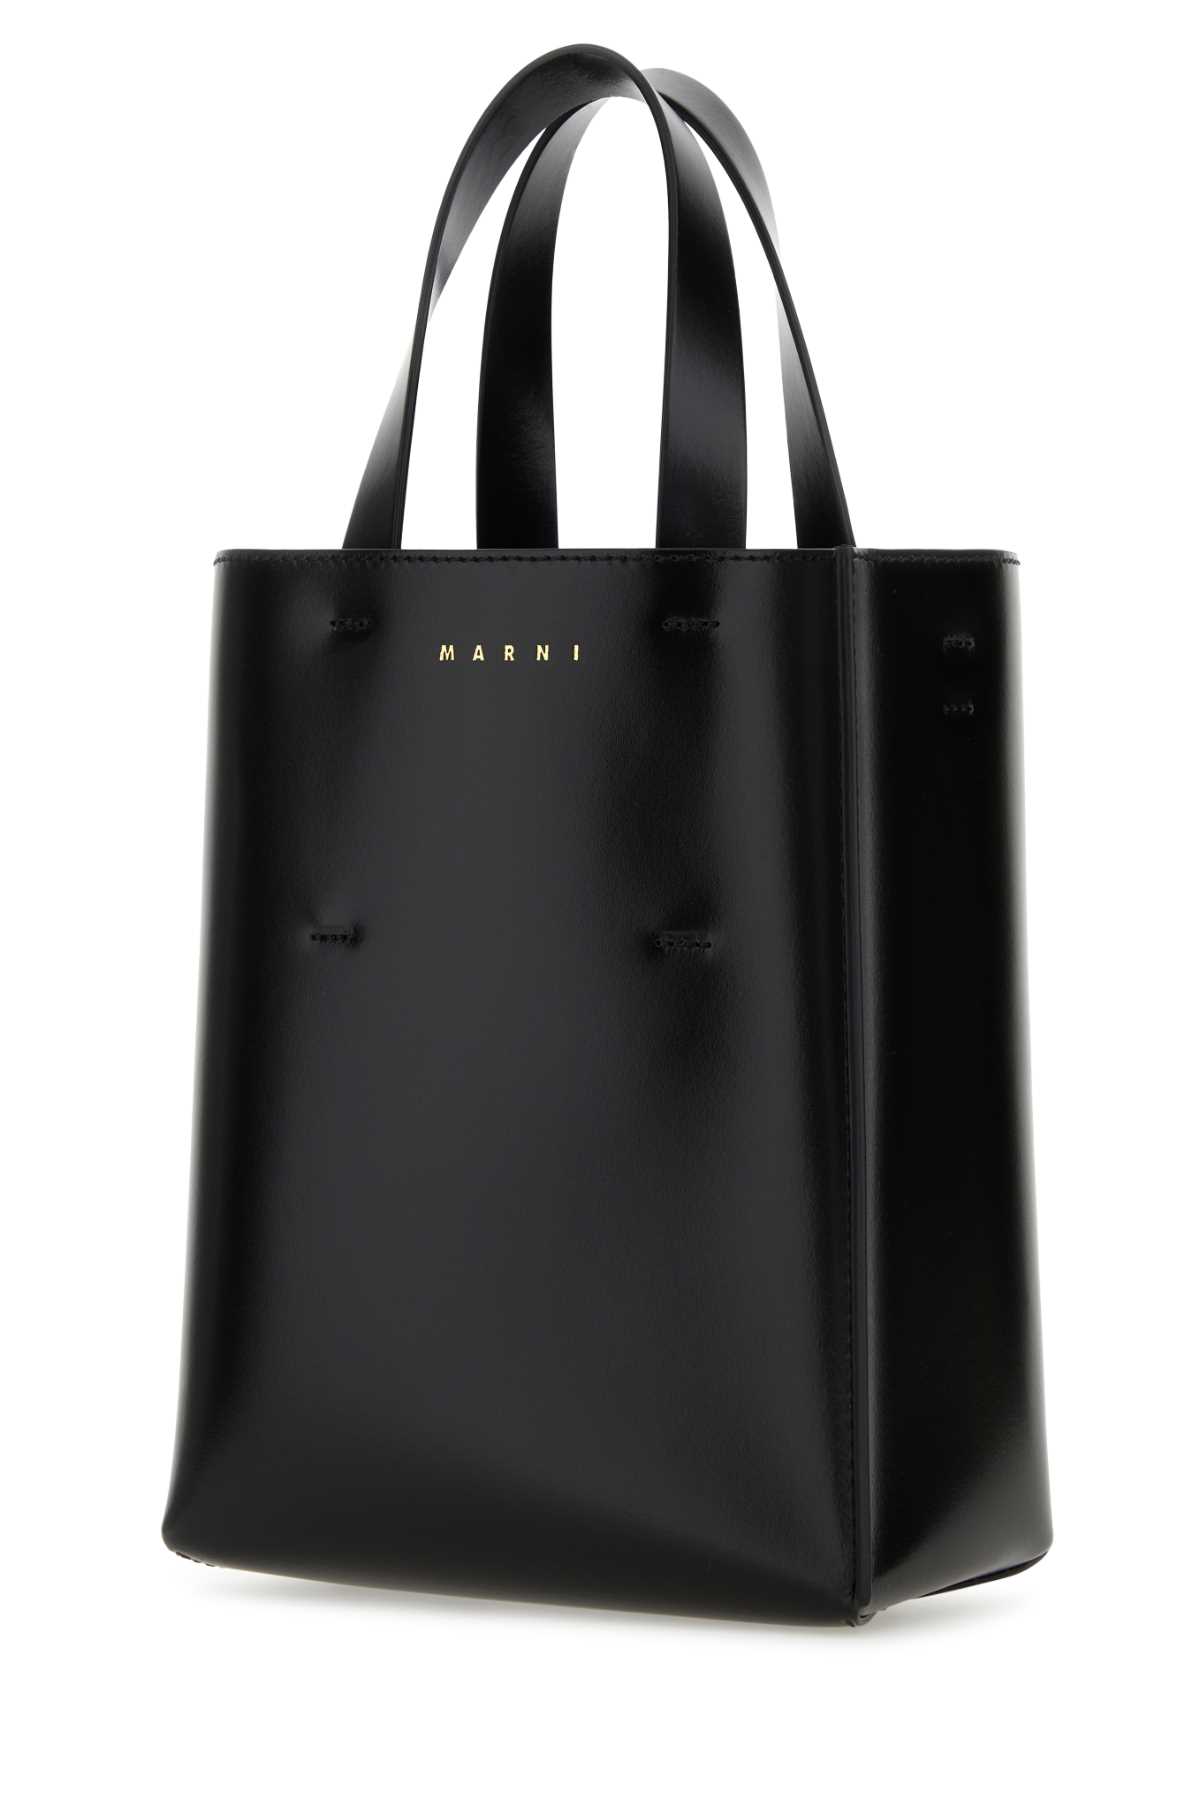 Marni Black Leather Museo Handbag In Z2p71